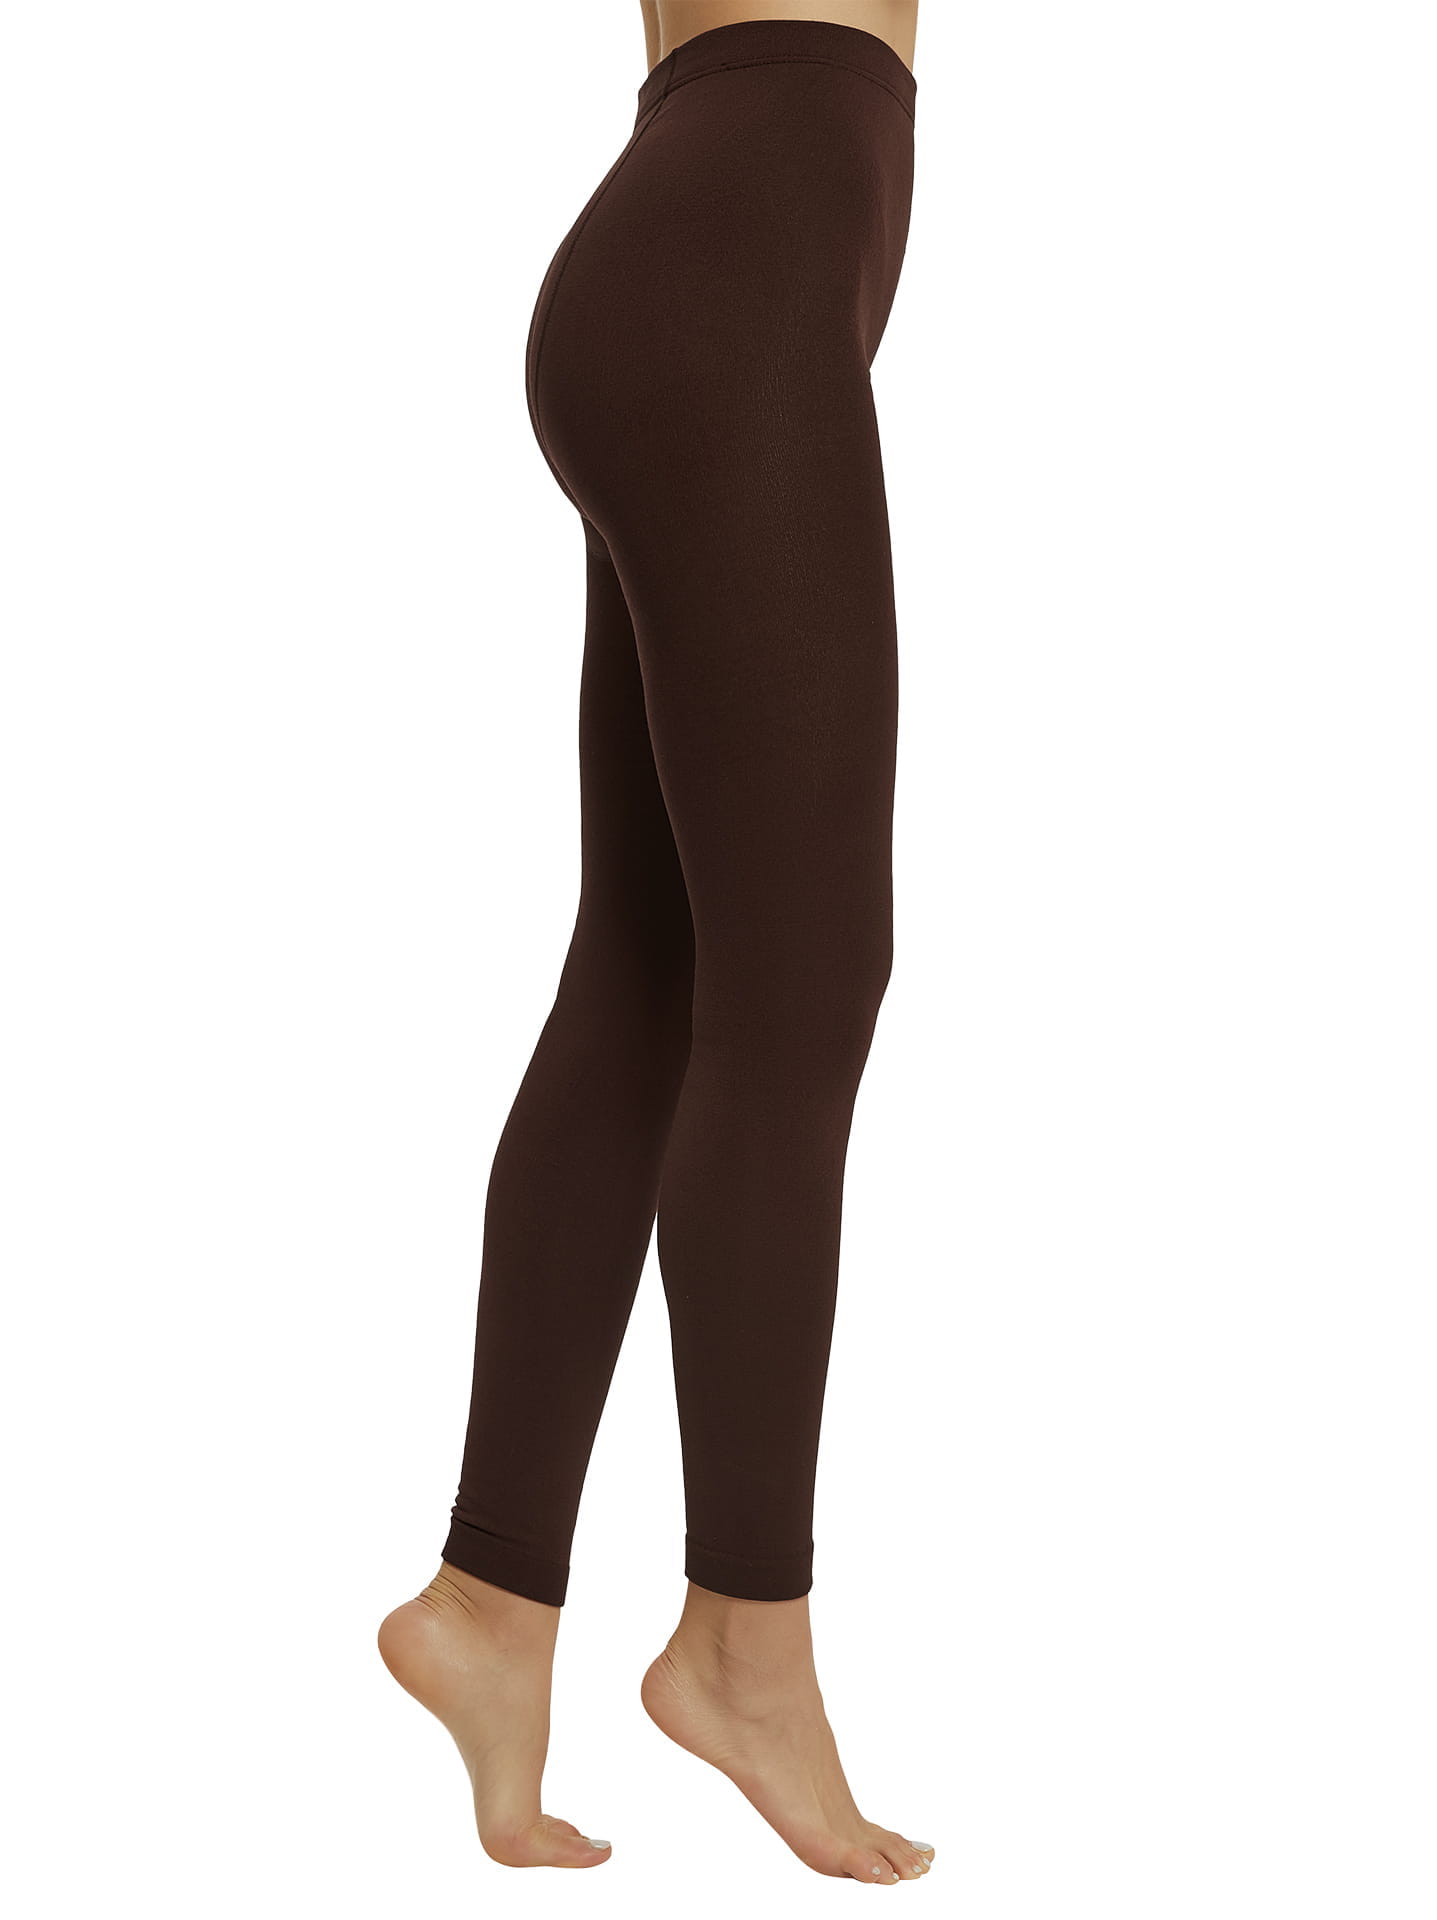 Thermal leggings 380den curvy in dark brown, 4.99€